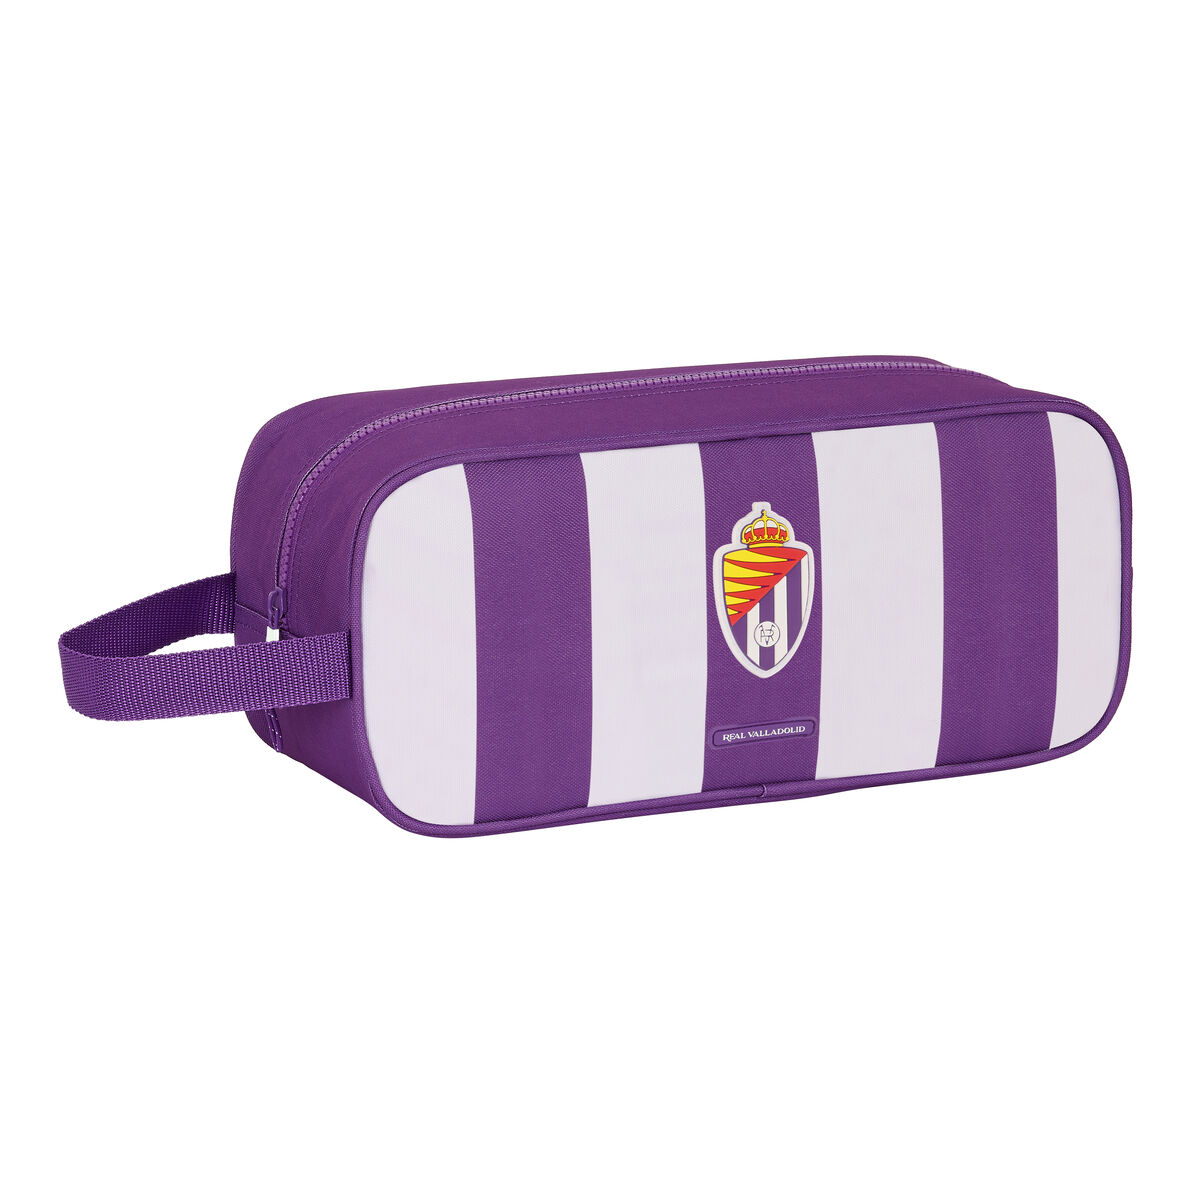 Travel Slipper Holder Real Valladolid C.F. White Purple 34 x 15 x 14 cm